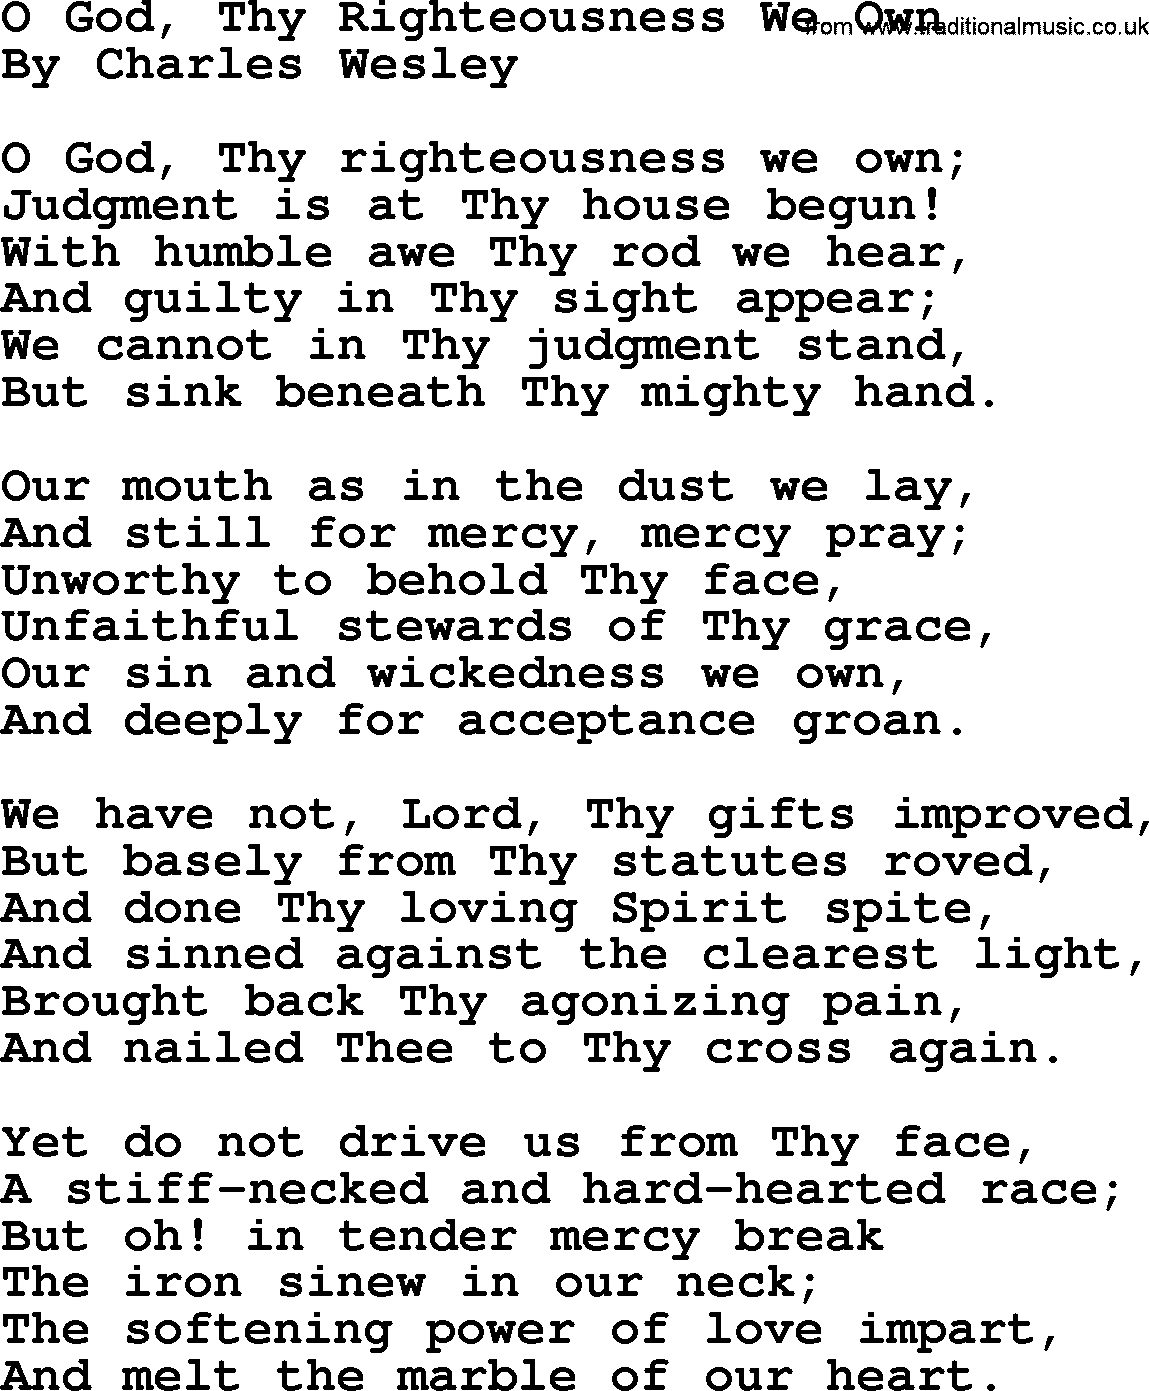 Charles Wesley hymn: O God, Thy Righteousness We Own, lyrics